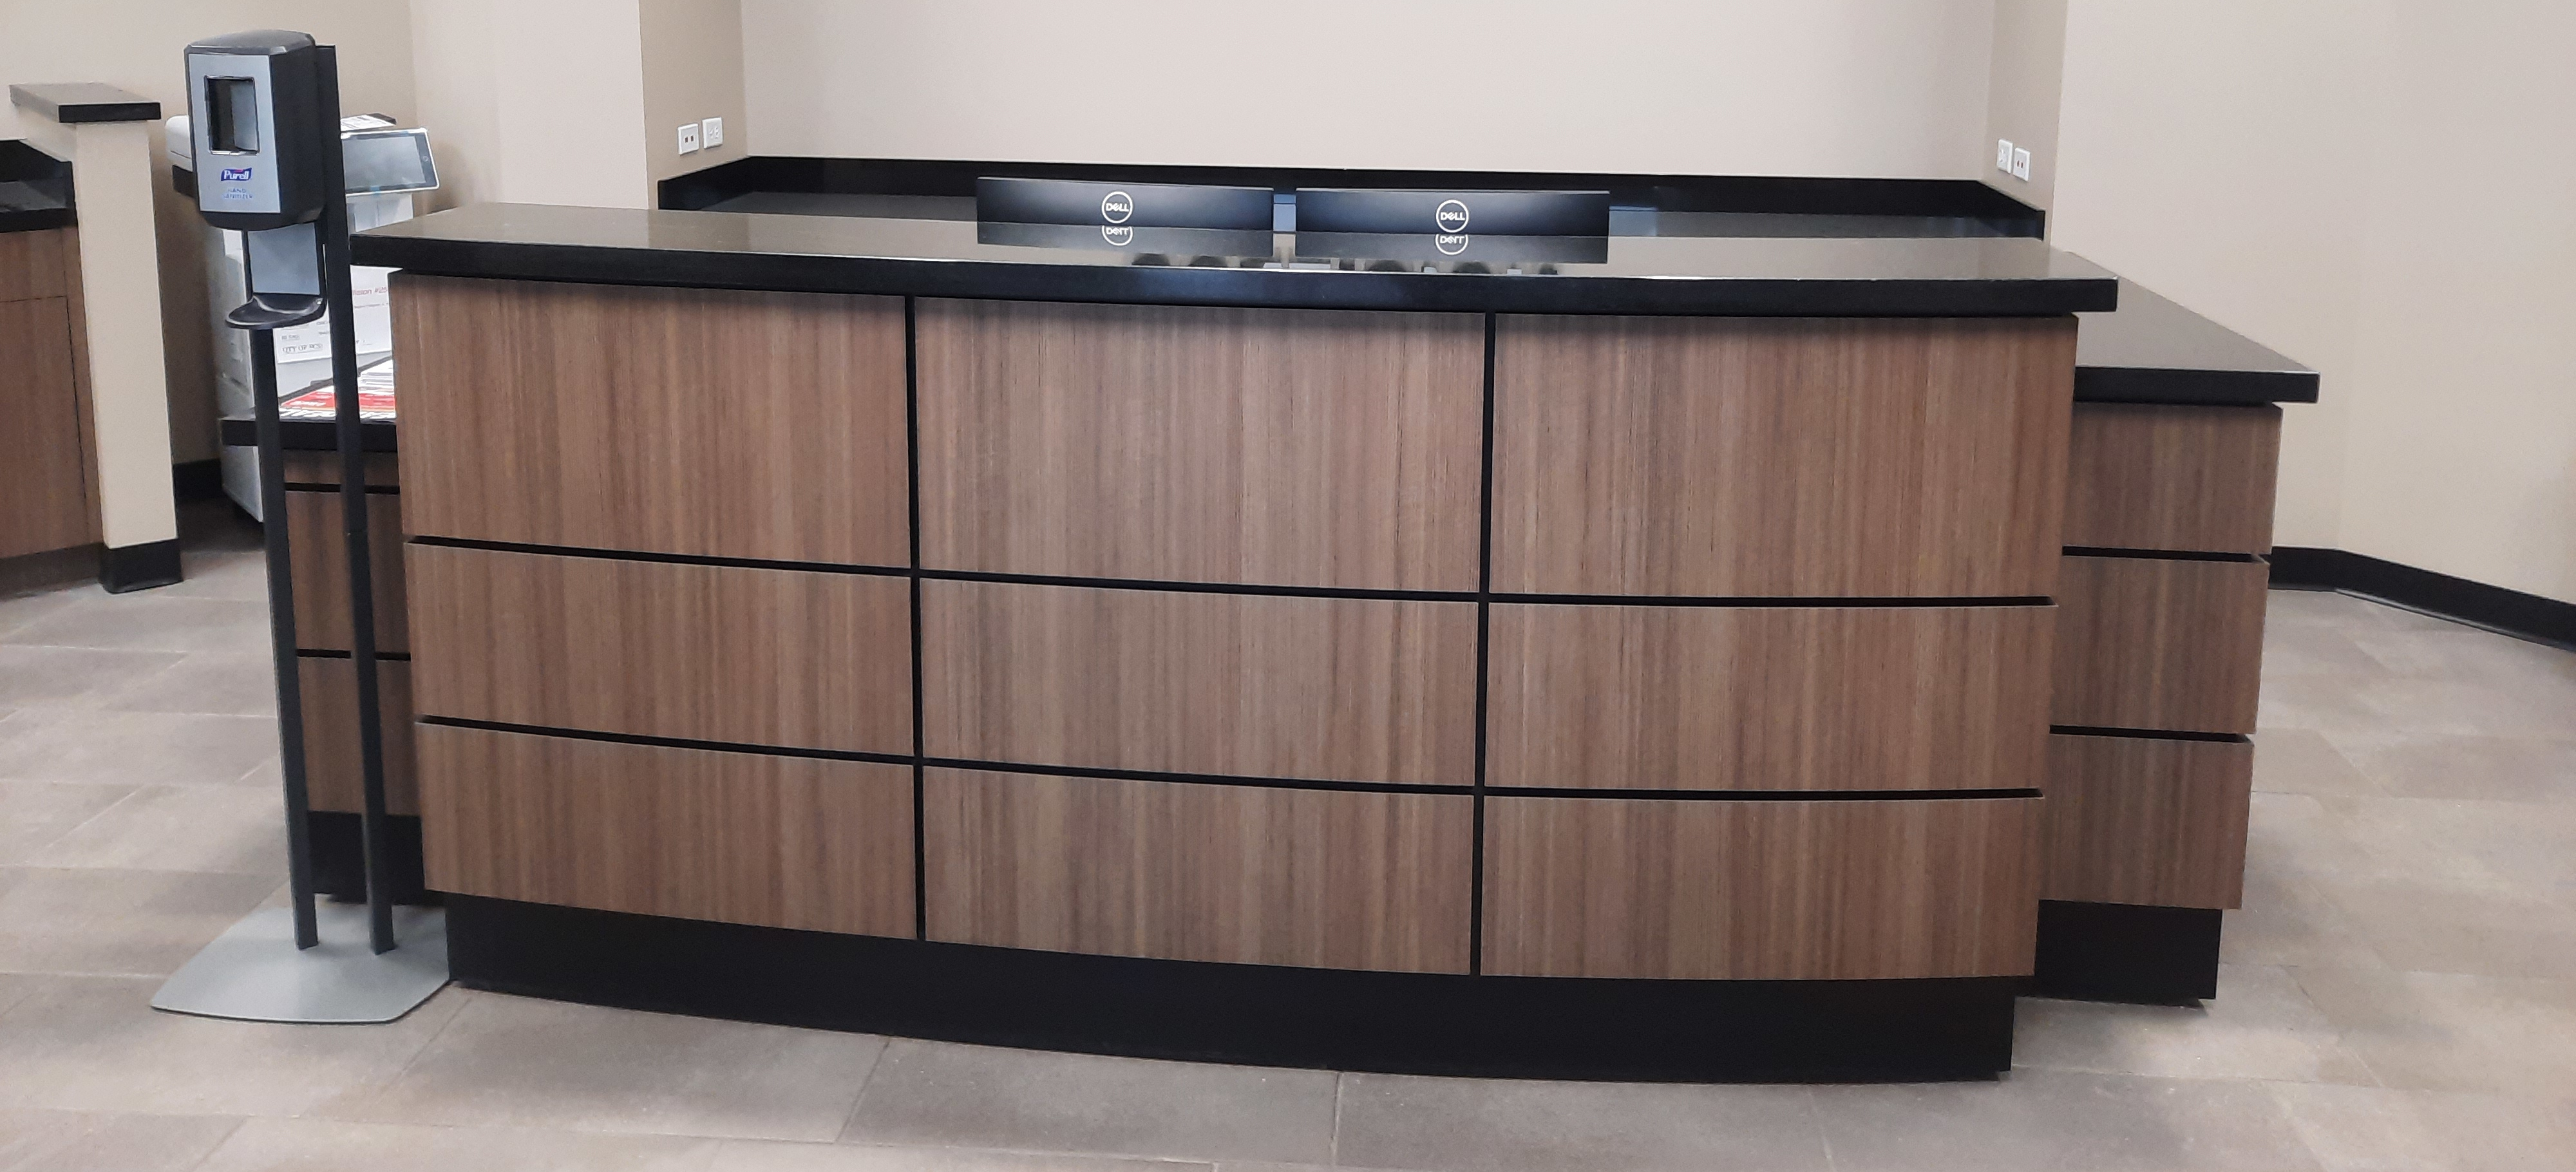 Custom reception desk with wood grain laminate face and black quartz work surfaces